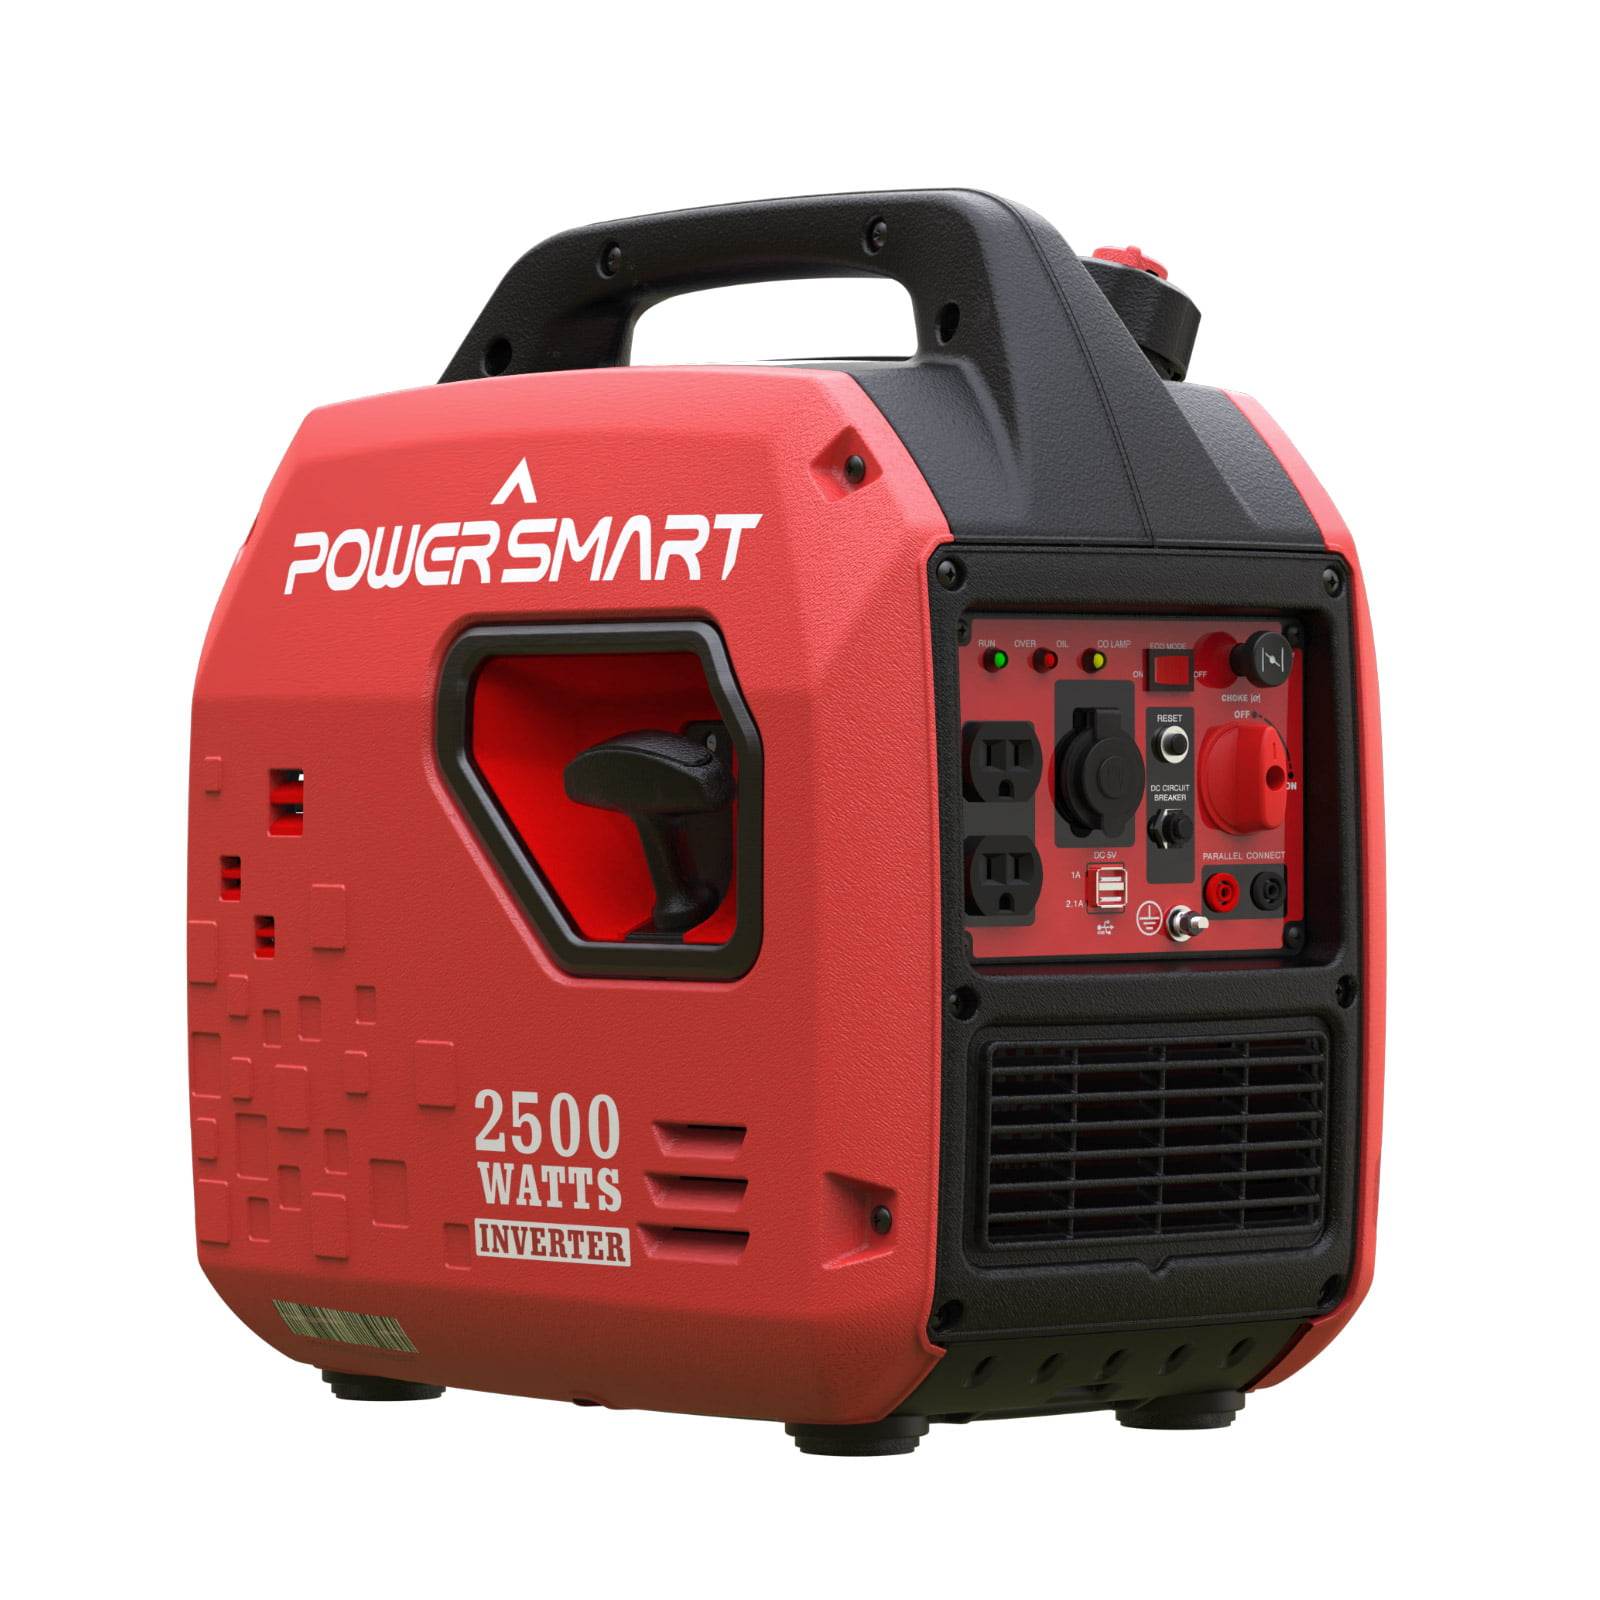 PowerSmart 2500W Portable Inverter Gasoline Powered Generator